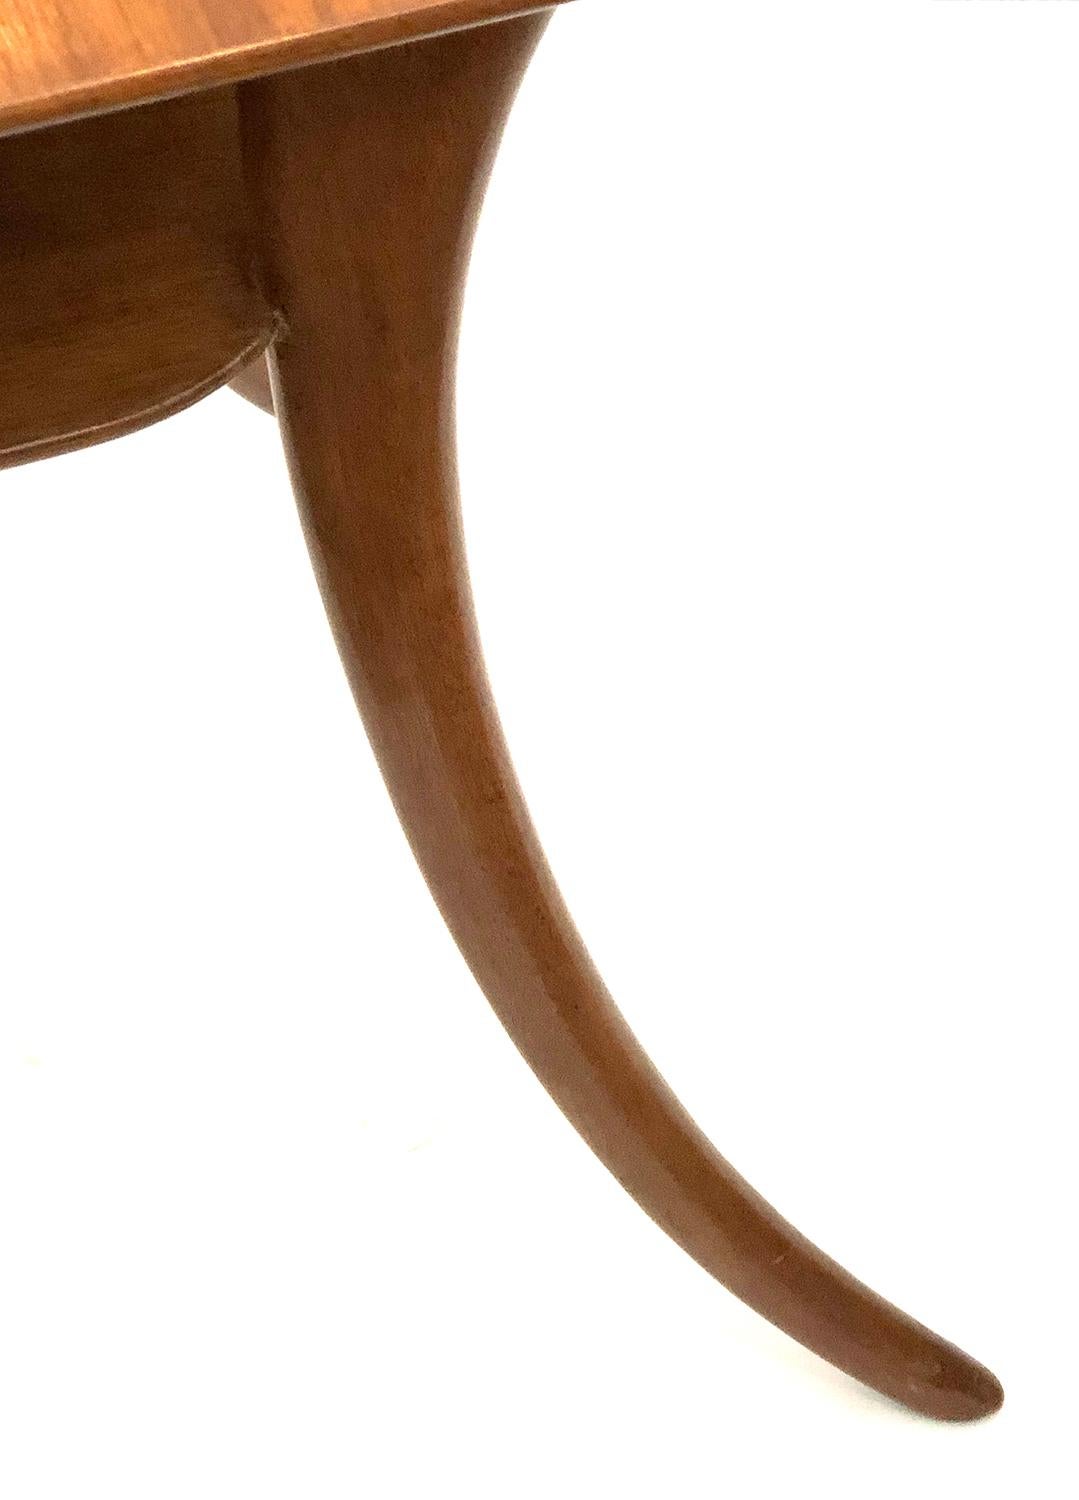 Mid-20th Century Robsjohn-Gibbings for Widdicomb rectangular walnut Klismos sabre-leg Side Table